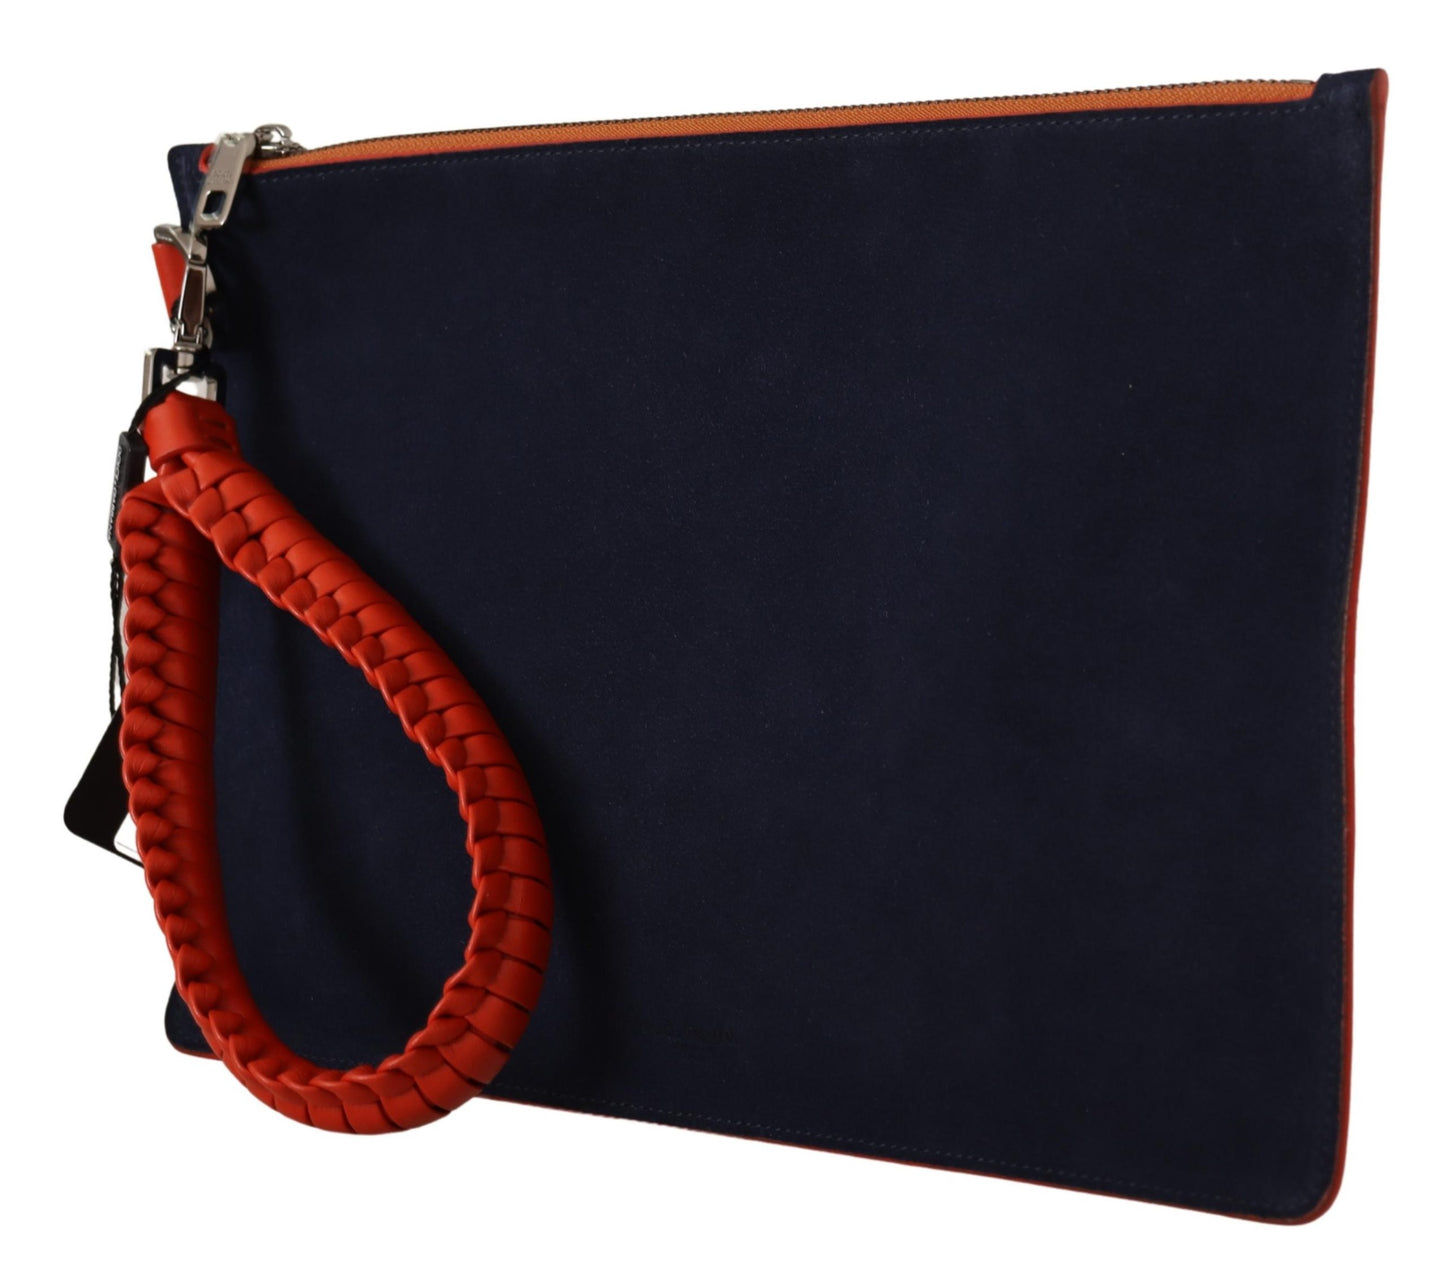 Orange Calf Leather Flat Pouch Wrist Strap Indigo Bag